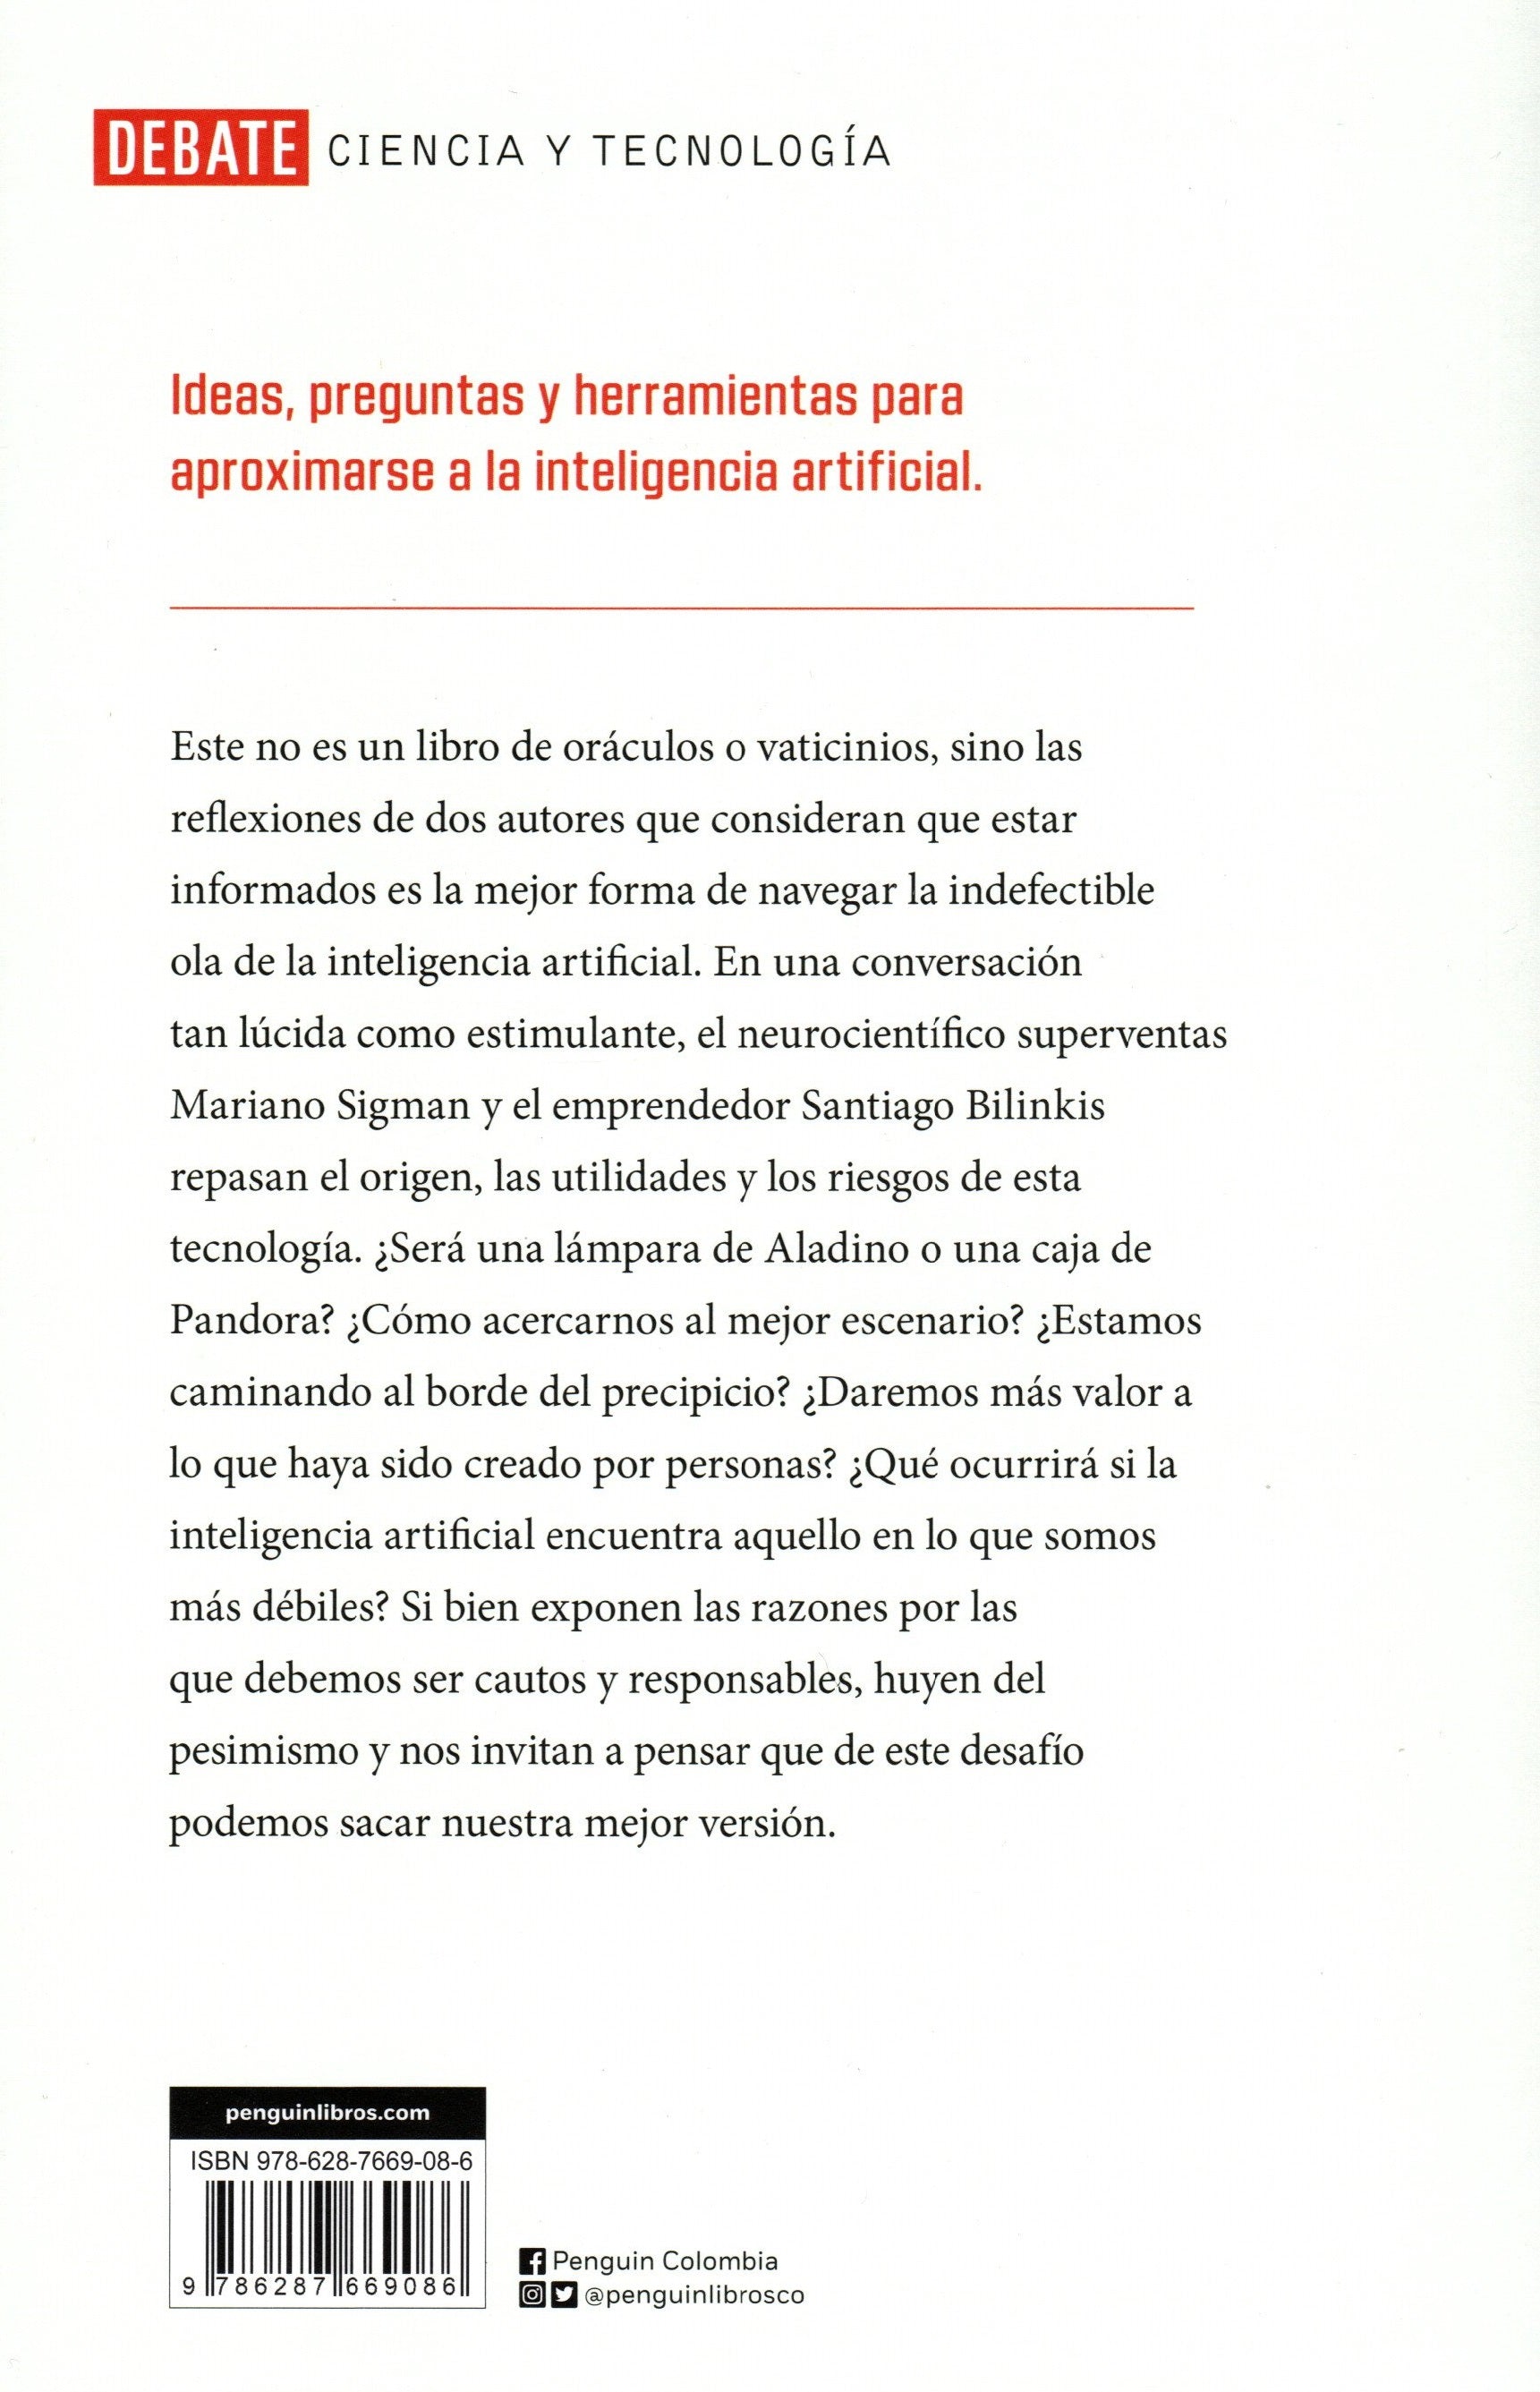 Libro Mariano Sigman/Santiago Bilinkis - Artificial